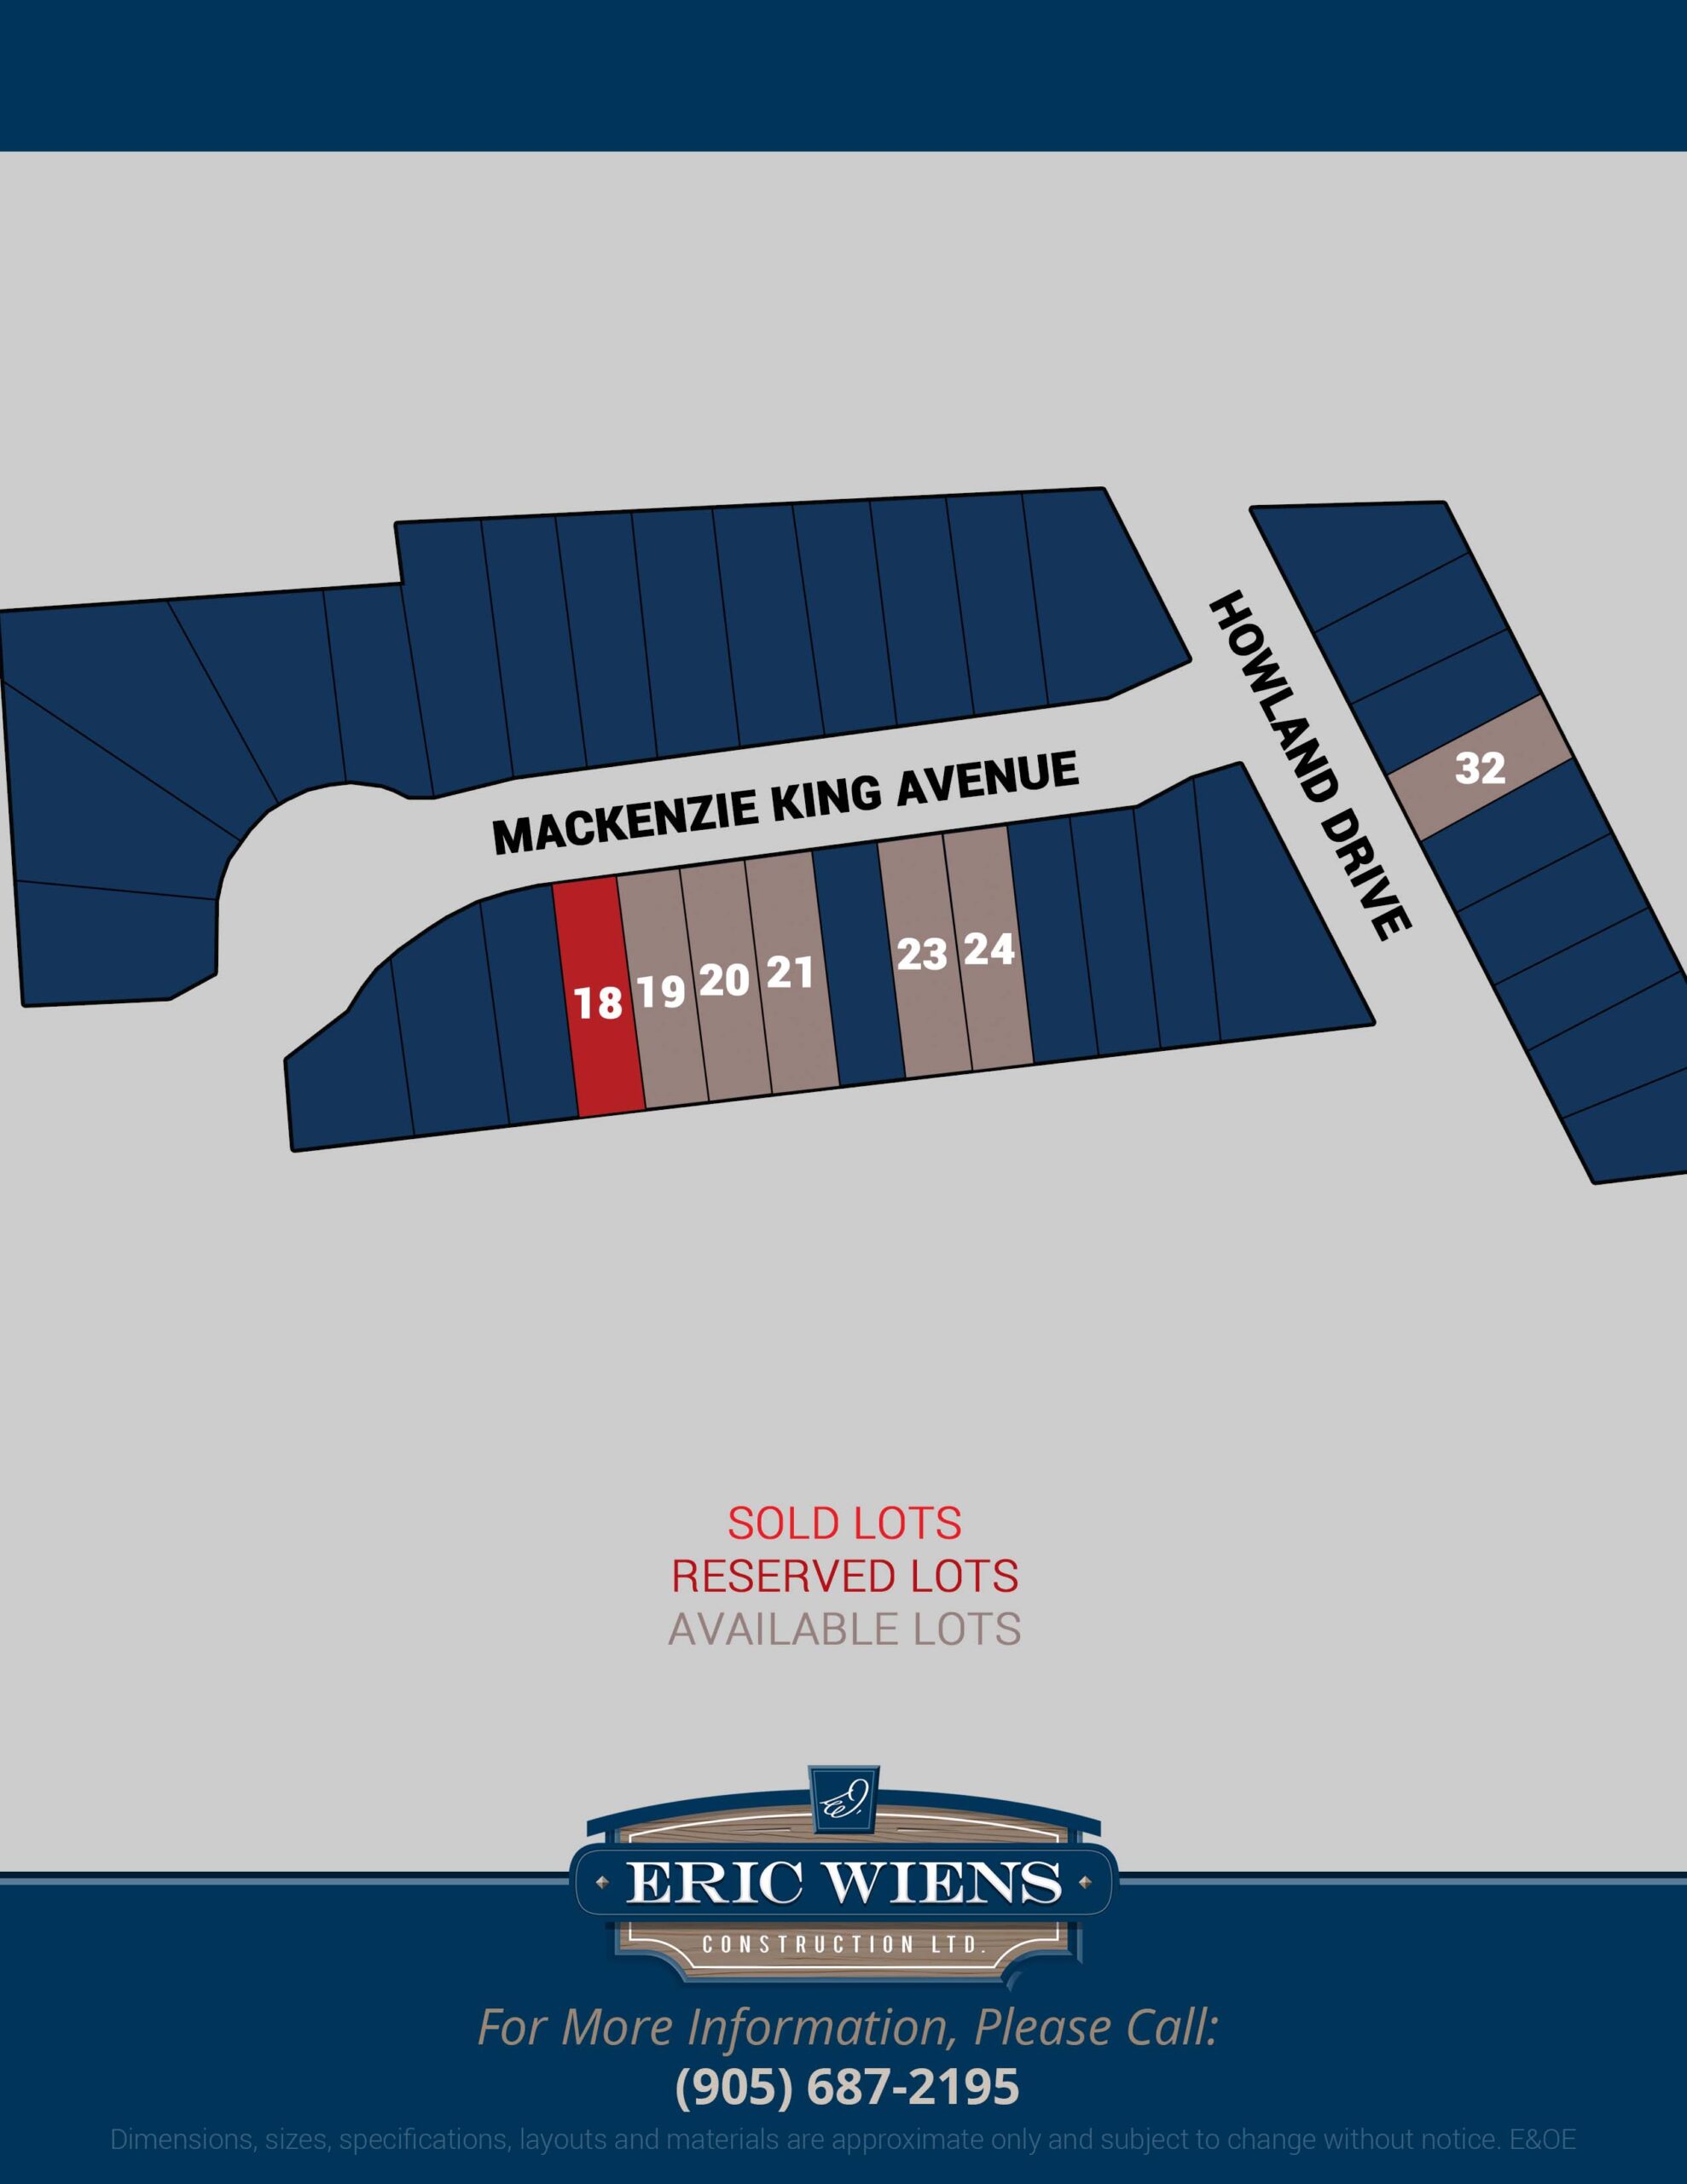 Lot 23 Mackenzie King Avenue Site Plan